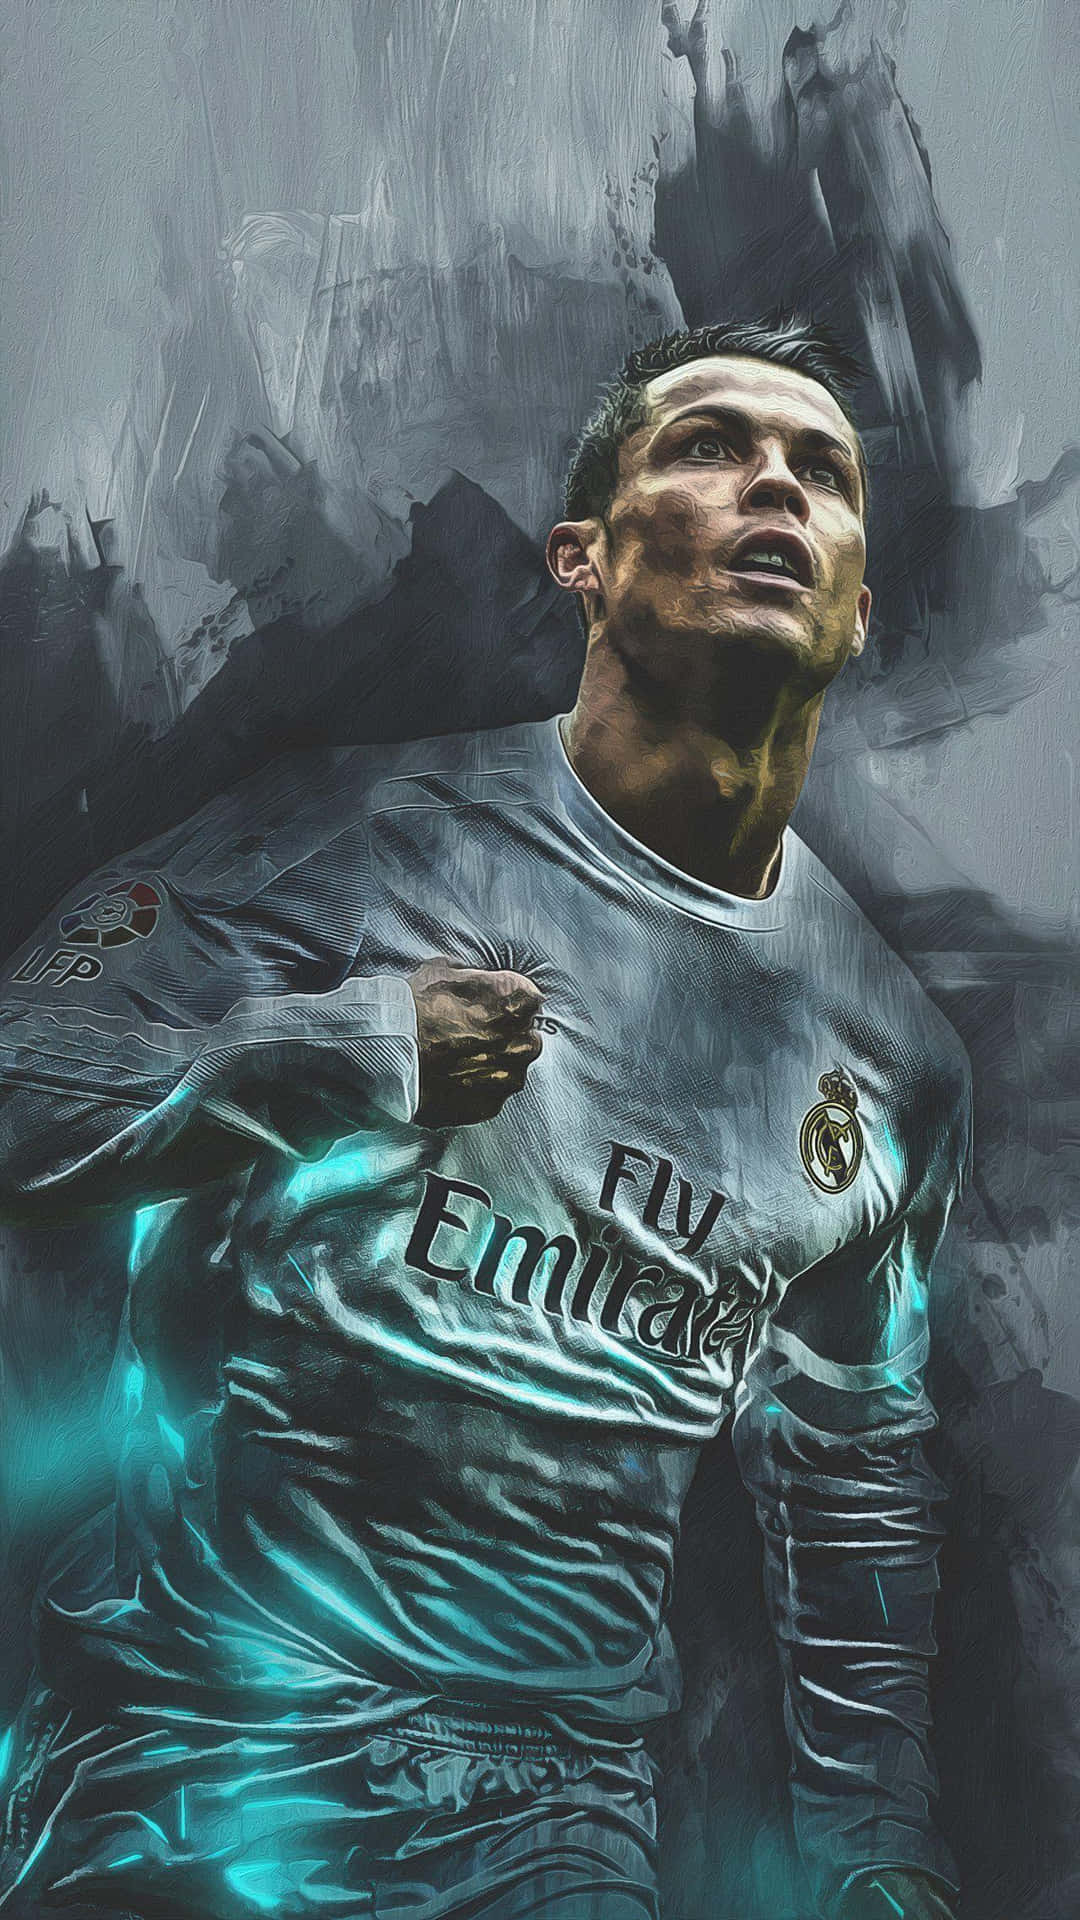 Cristiano Ronaldo fejrer efter scoring under et spil. Wallpaper